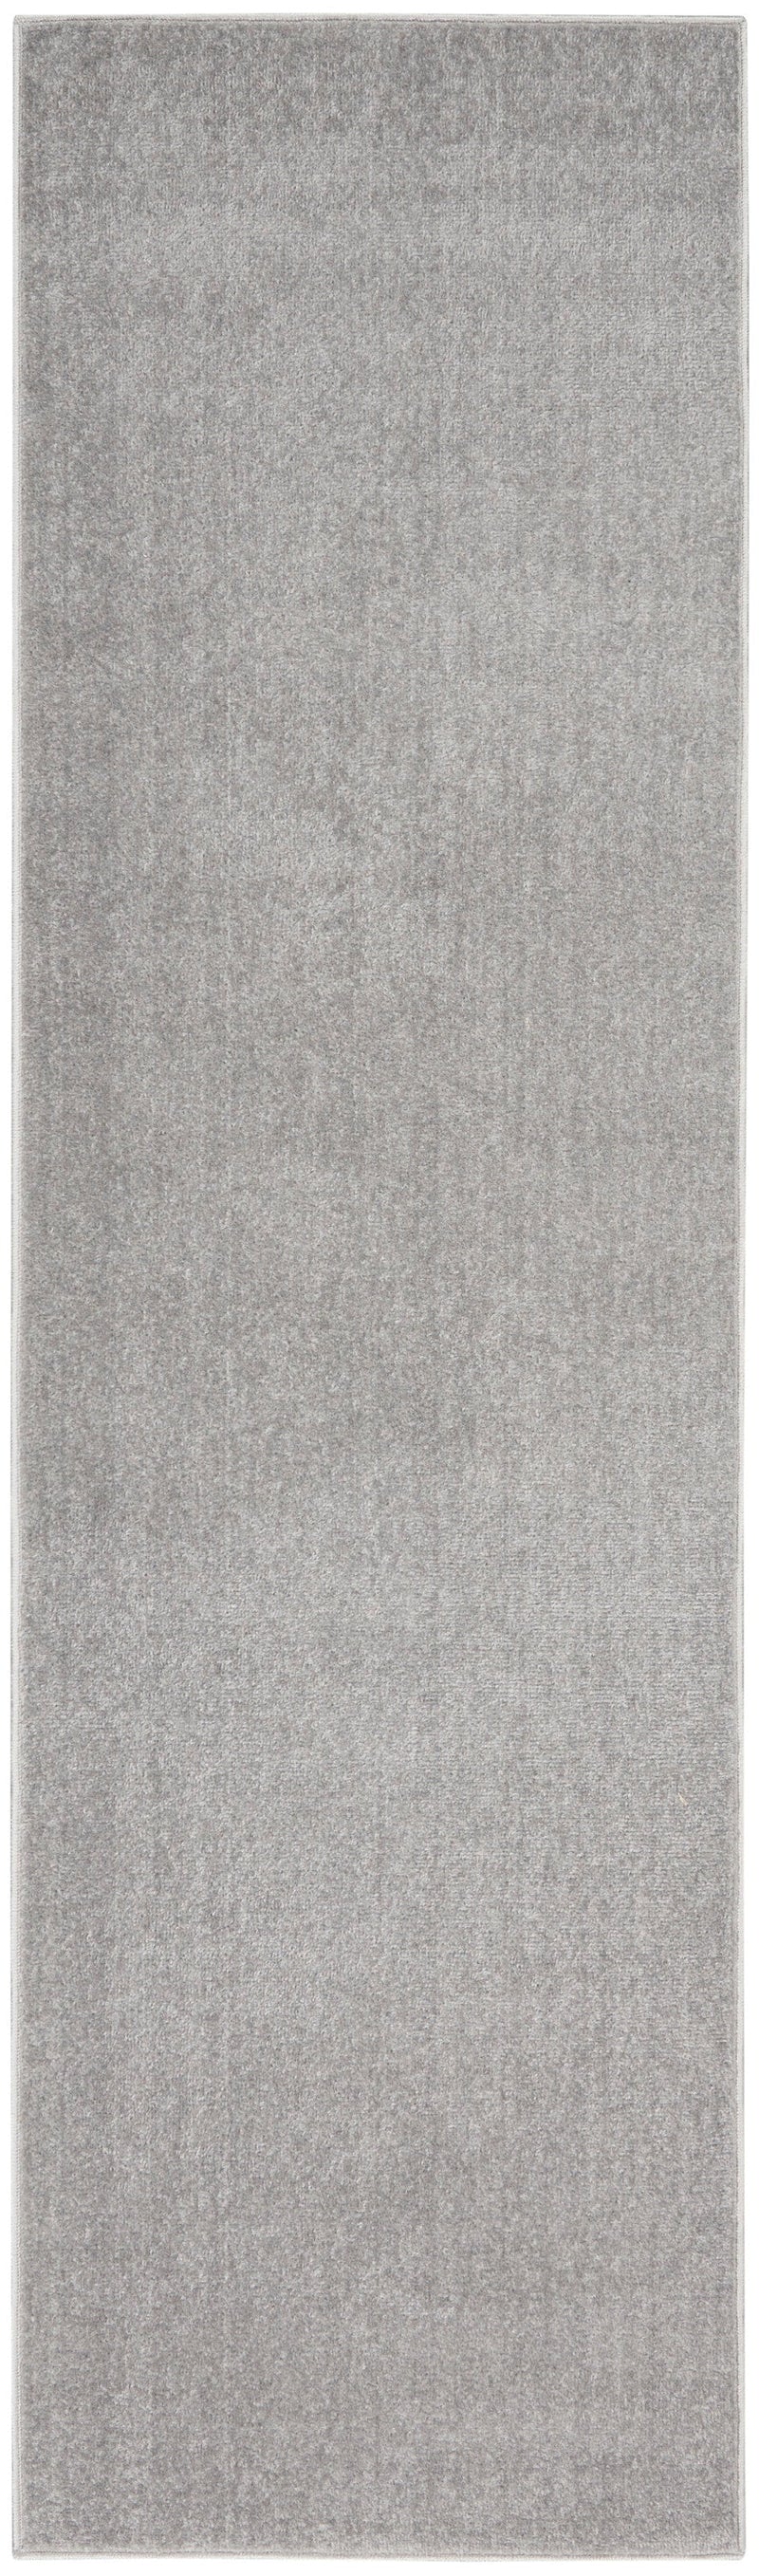 media image for nourison essentials silver grey rug by nourison 99446062369 redo 4 259